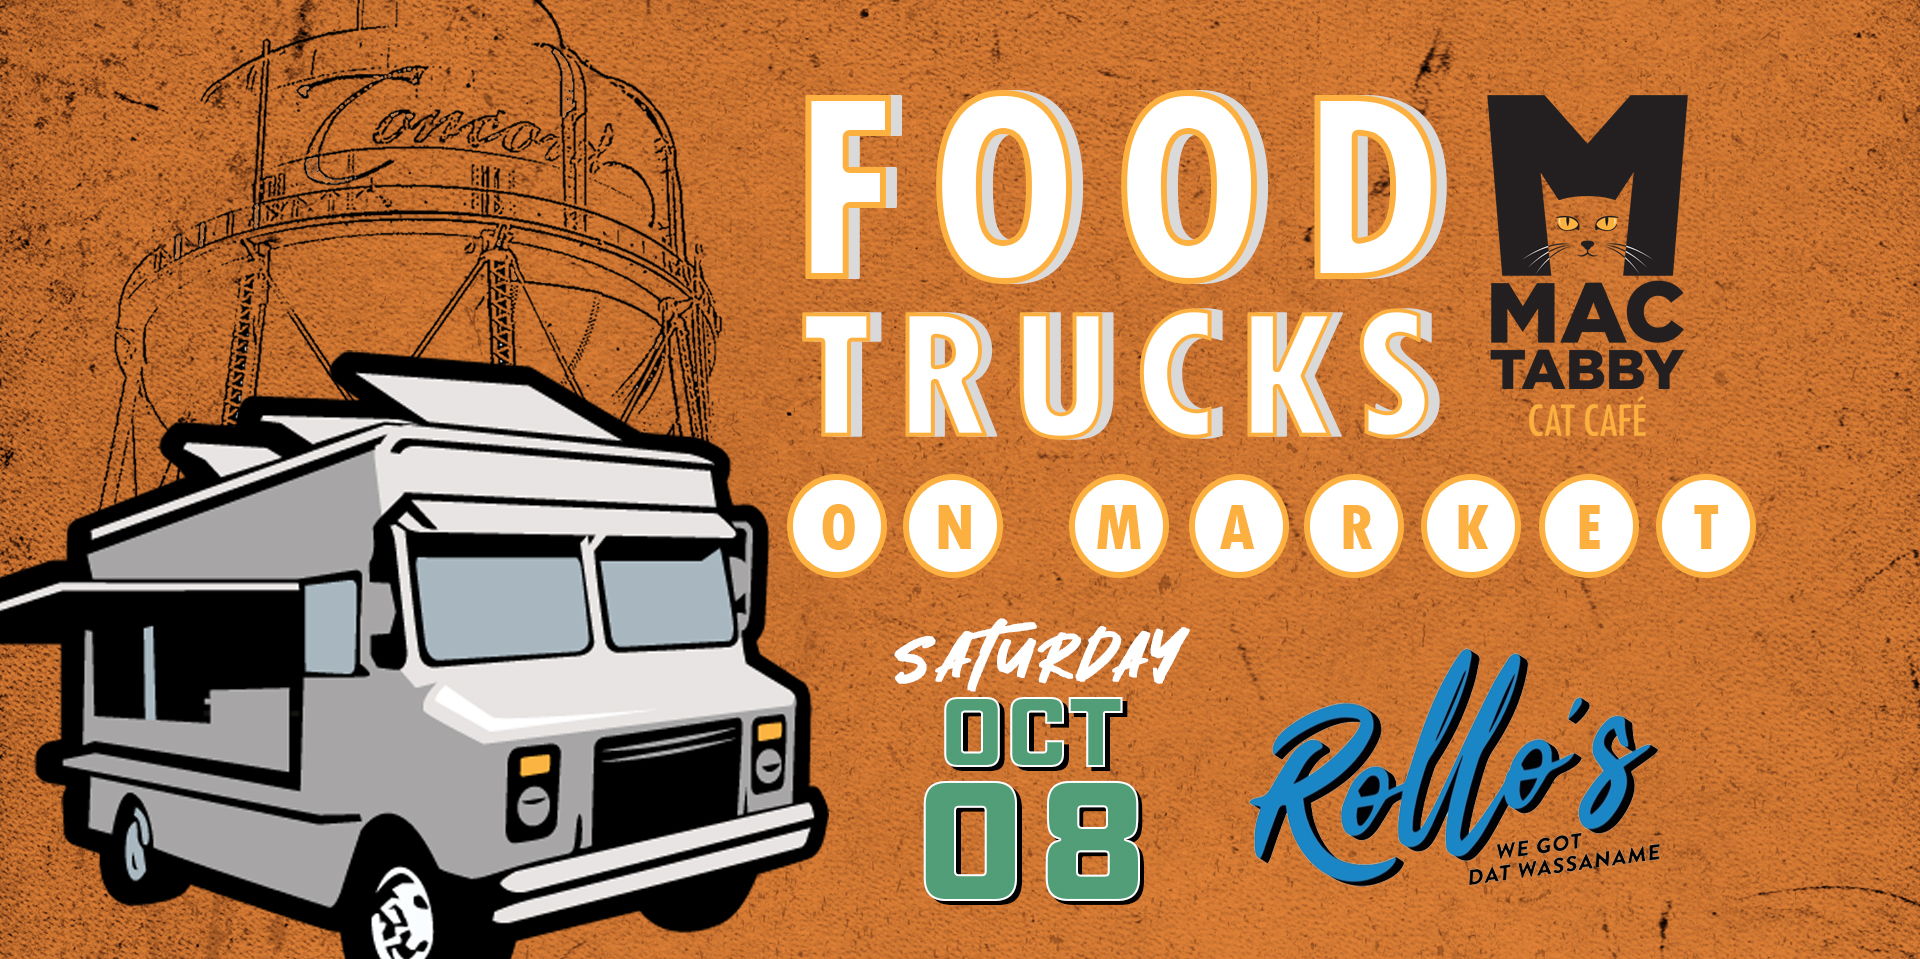 Food Trucks on Market - Rollo's Wings promotional image